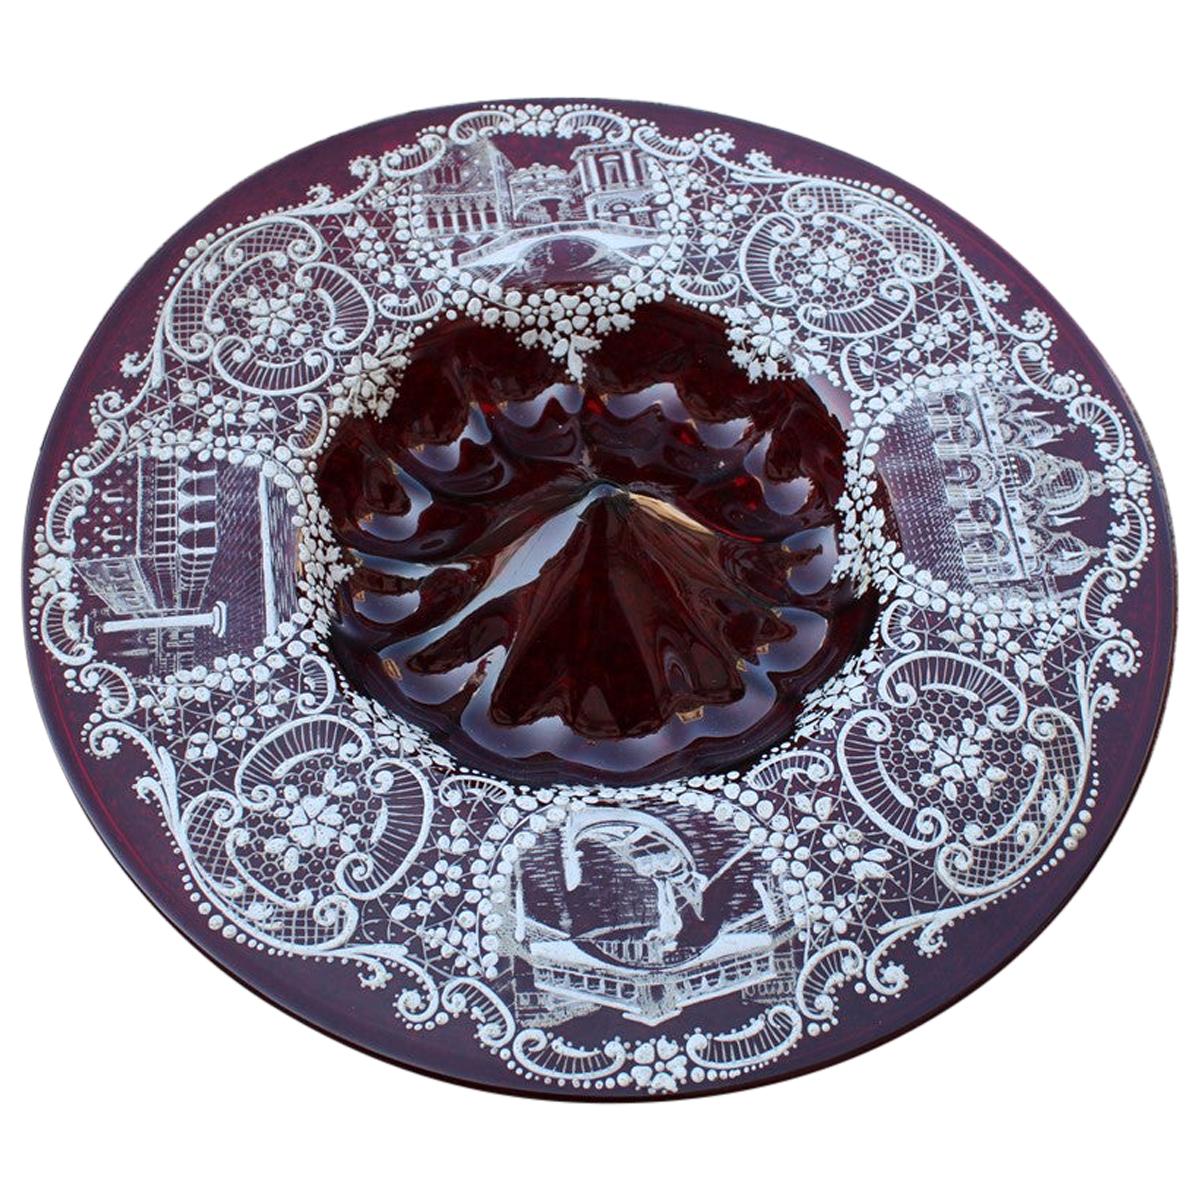 Red Rubin Murano Glass Decorative Bowl Style of Zecchin Cappellin 1920s Italy For Sale